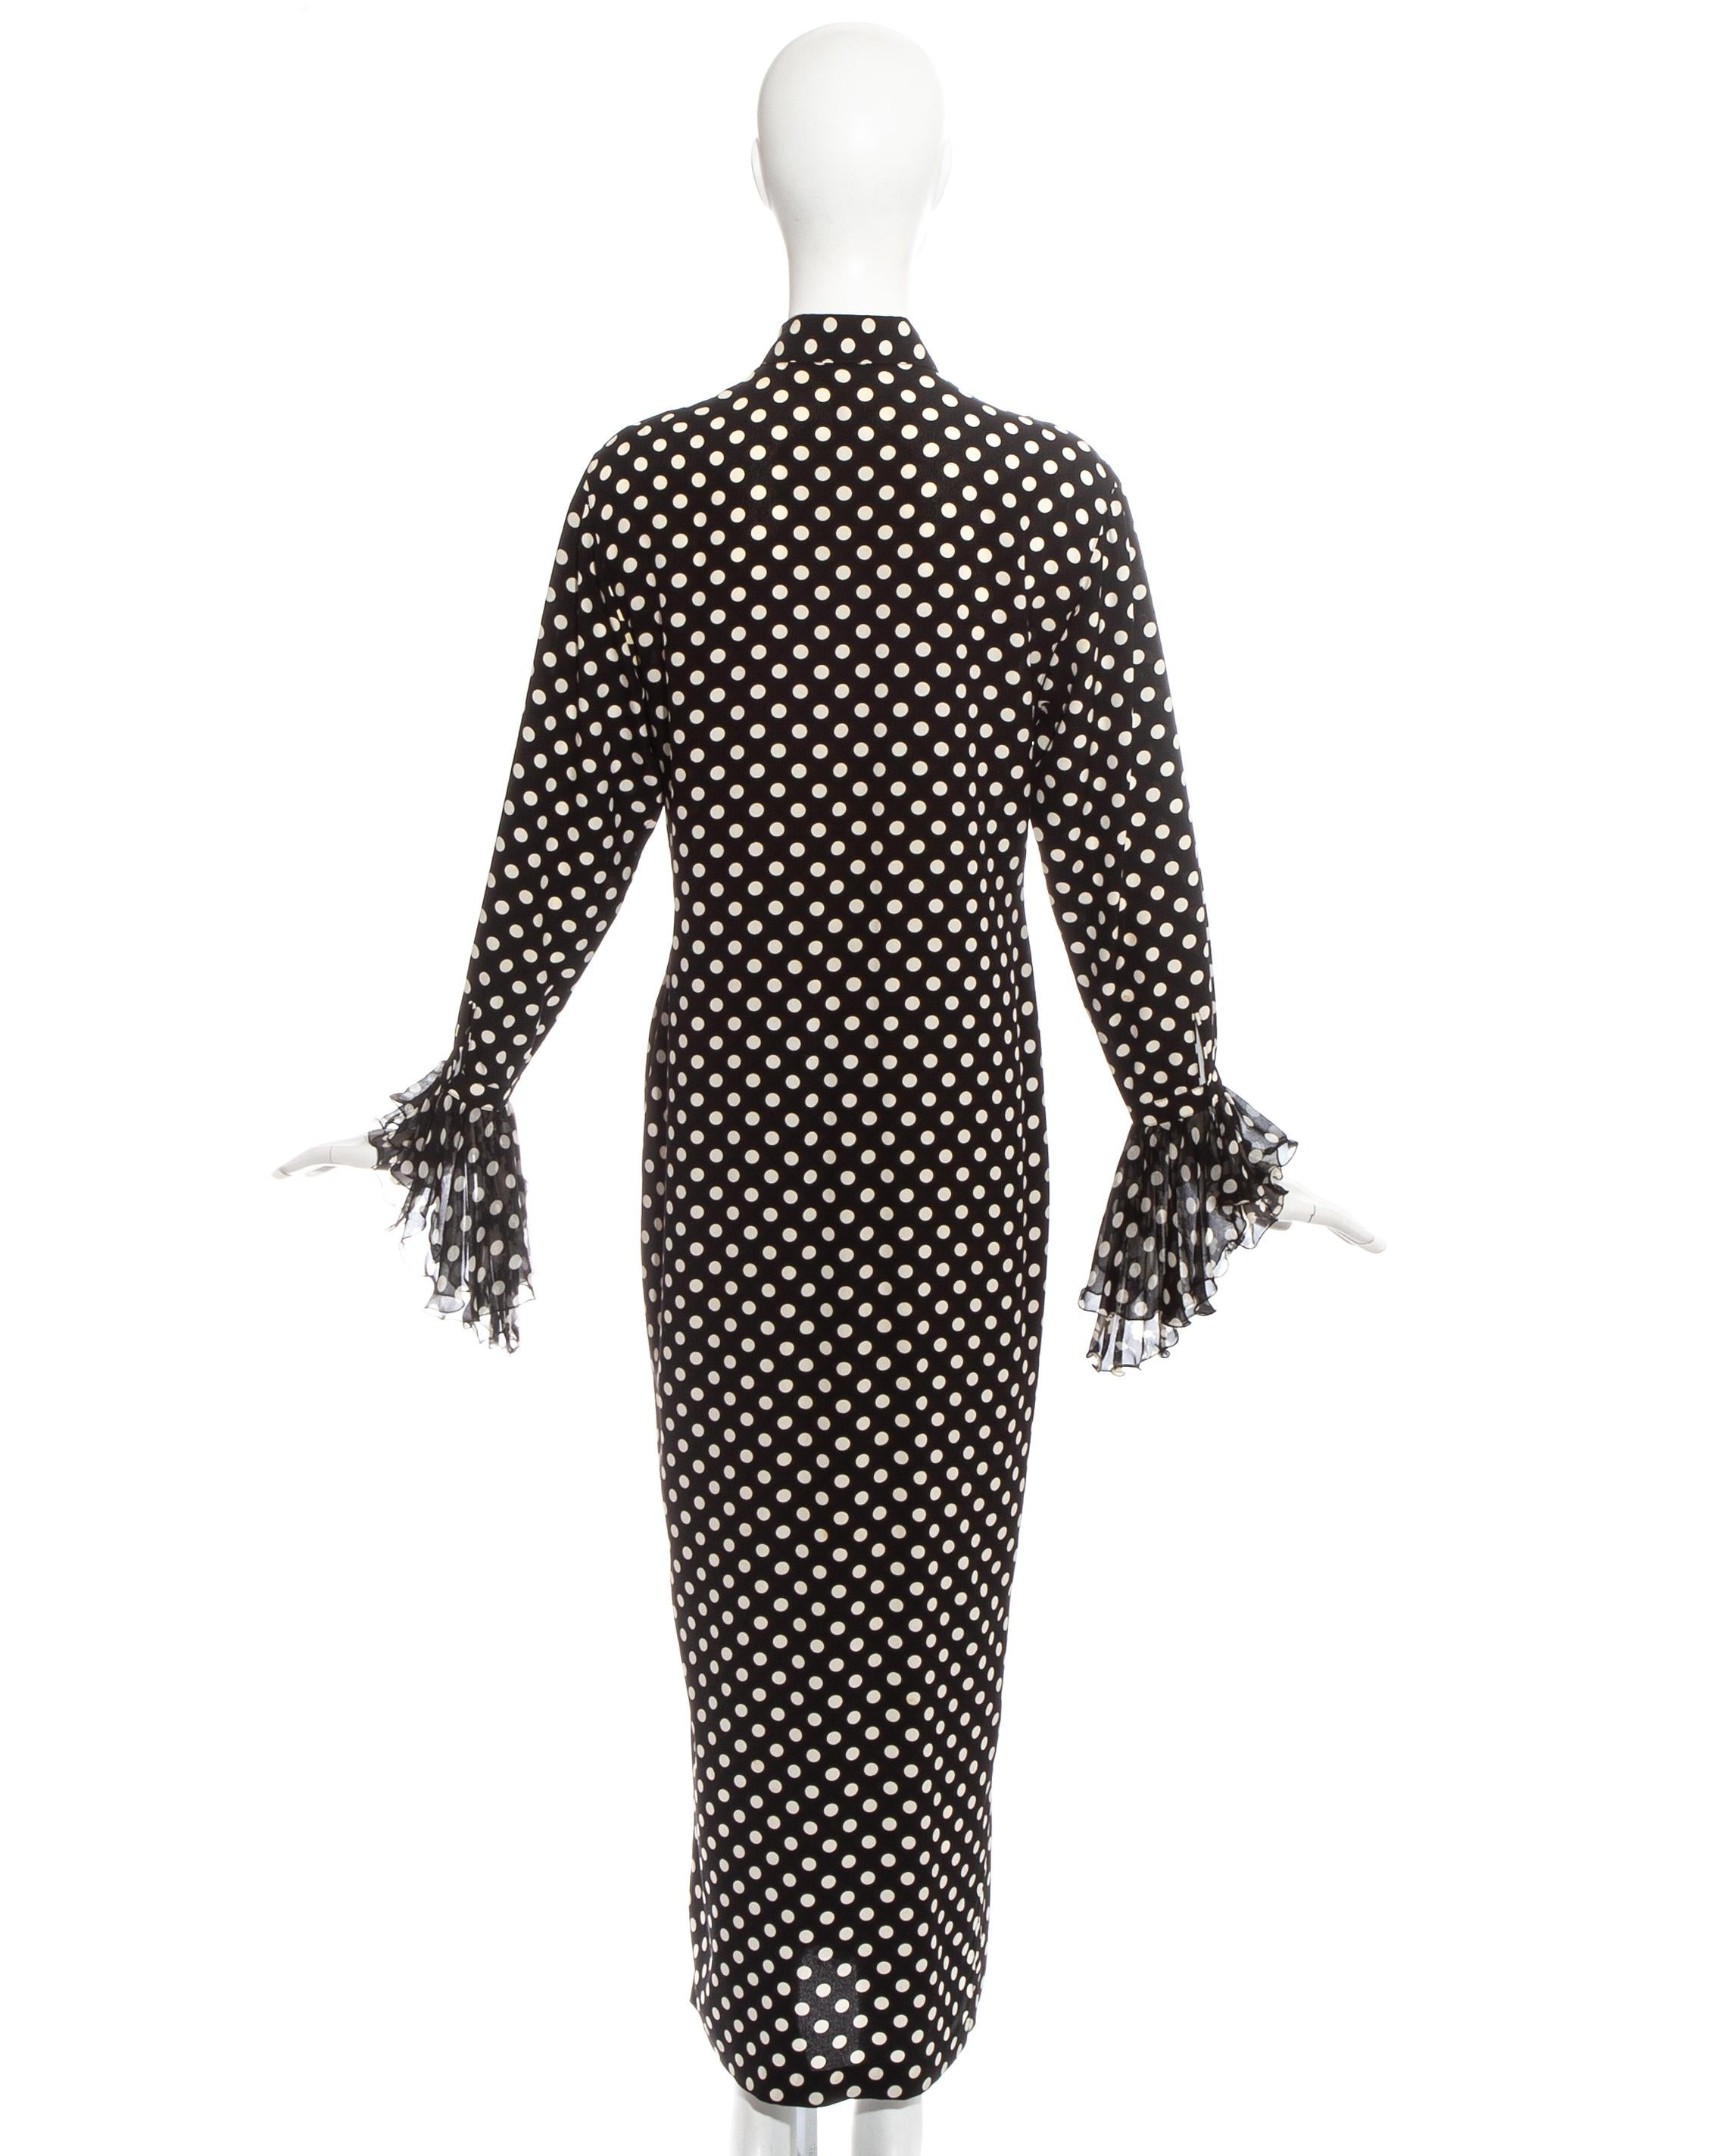 Gianni Versace black and white polkadot silk ruffled shirt dress, ss 1993 4